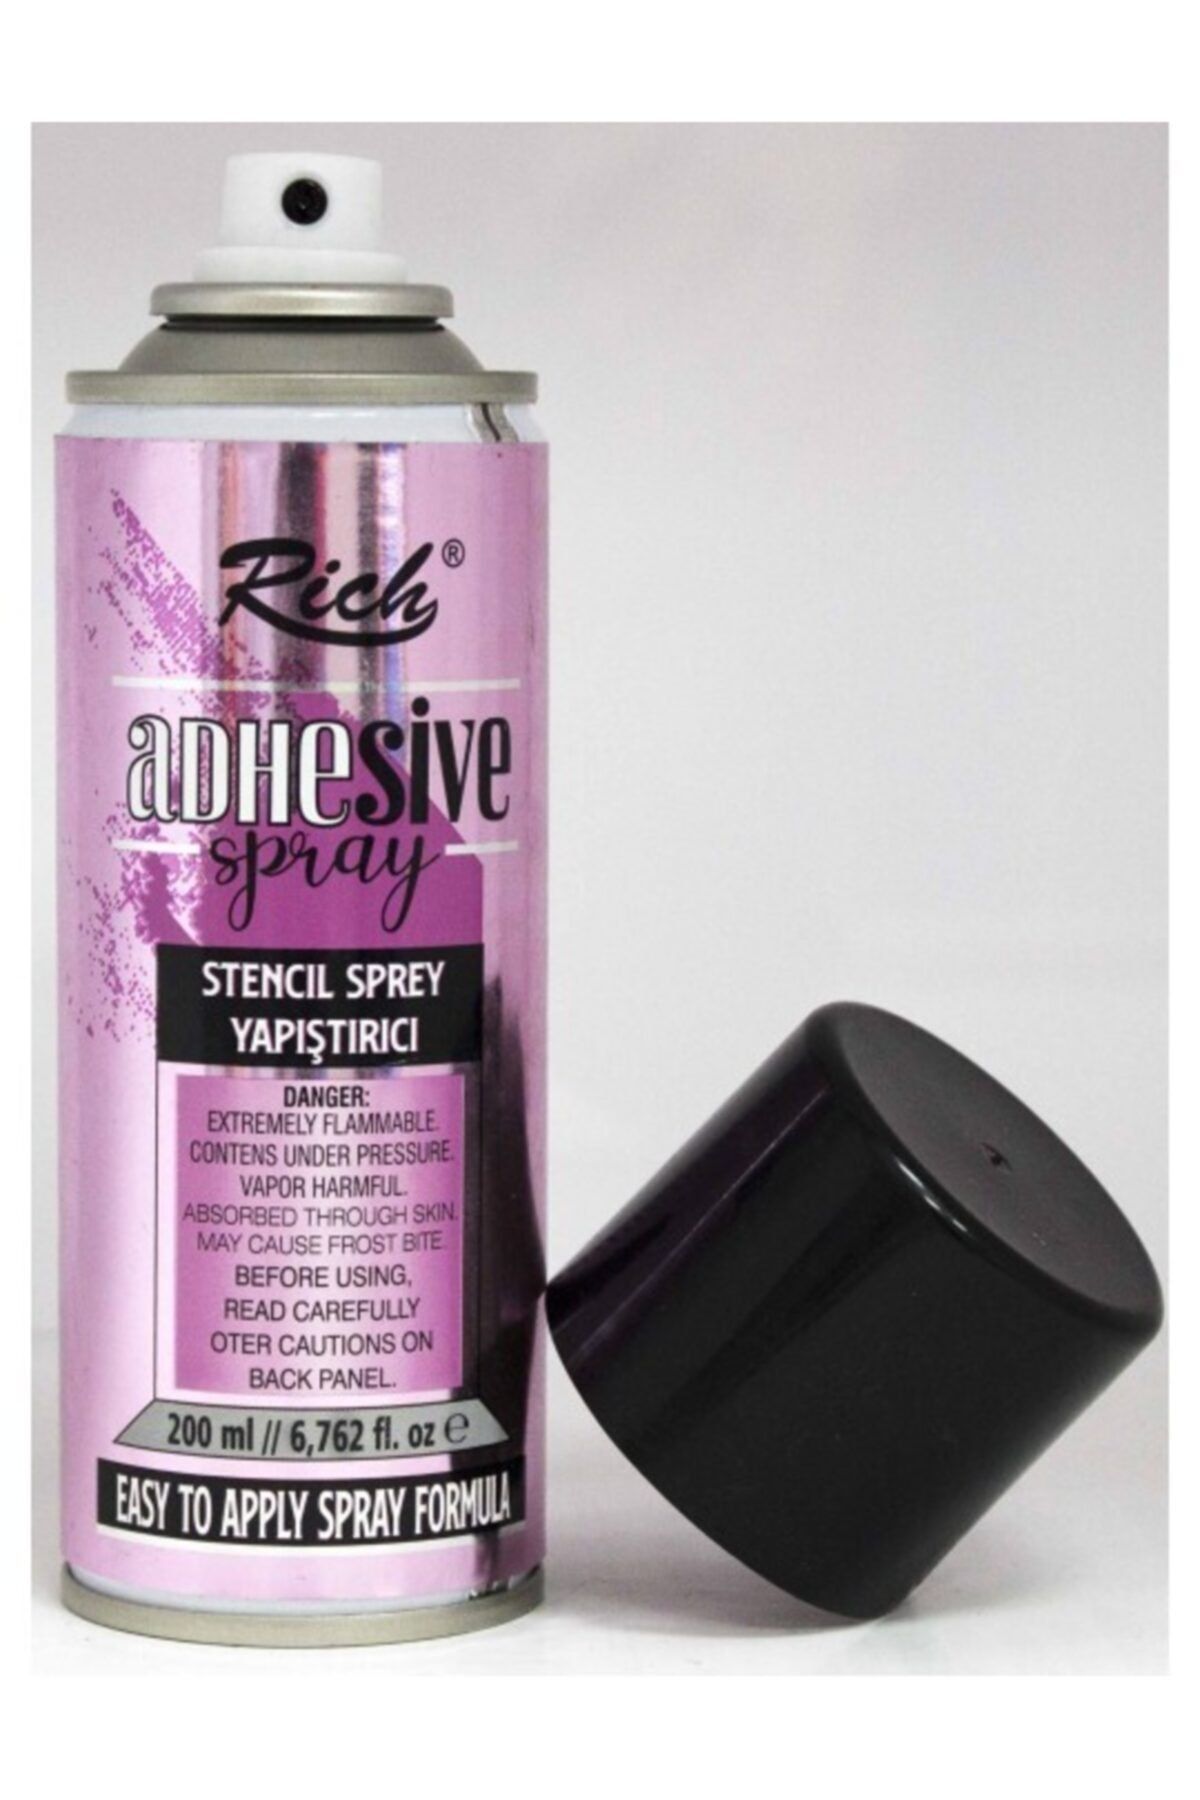 Rich Stencil Sprey Yapıştırıcı (adhesive) 200ml